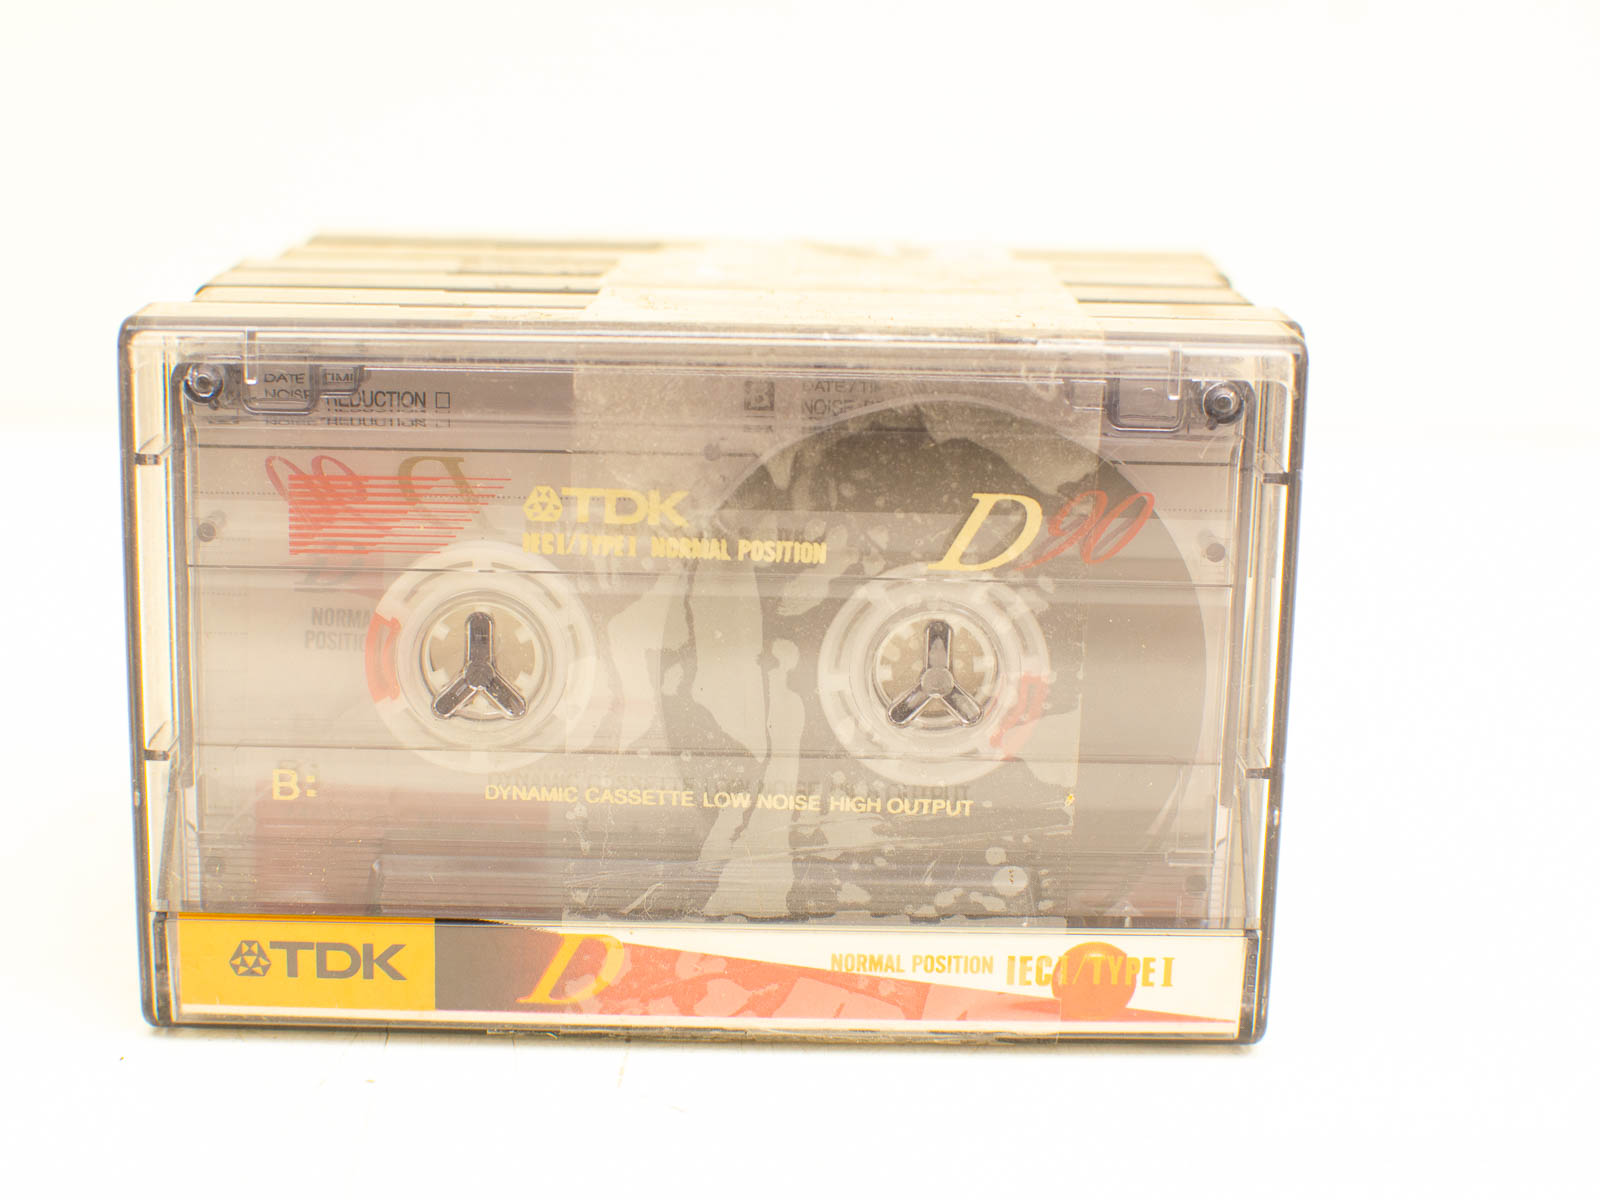 6 Tdk cassettebandjes  31374